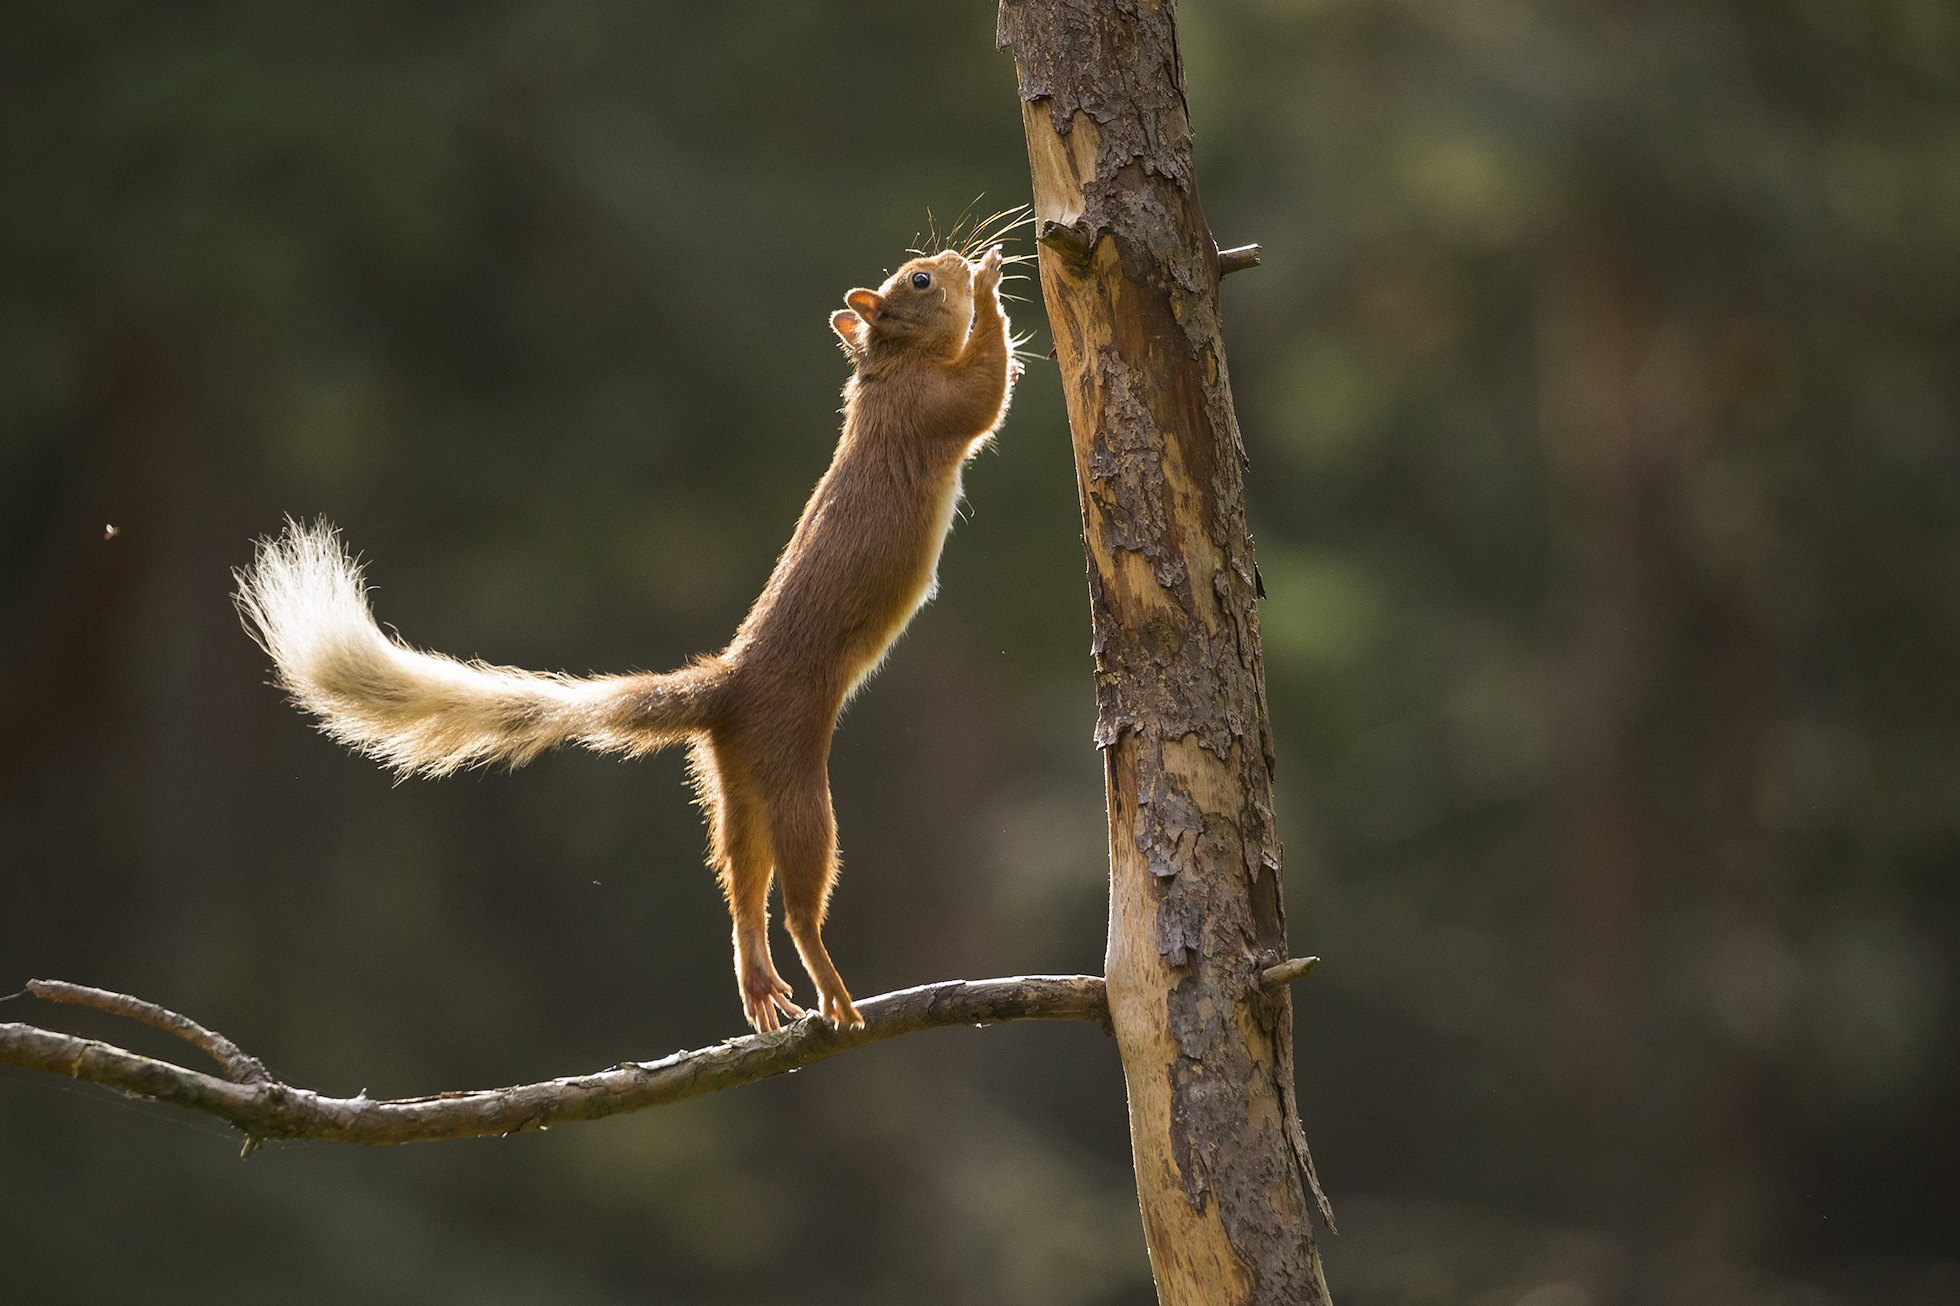 Red Squirrel (Sciurus vulgaris) leaping from pine branch